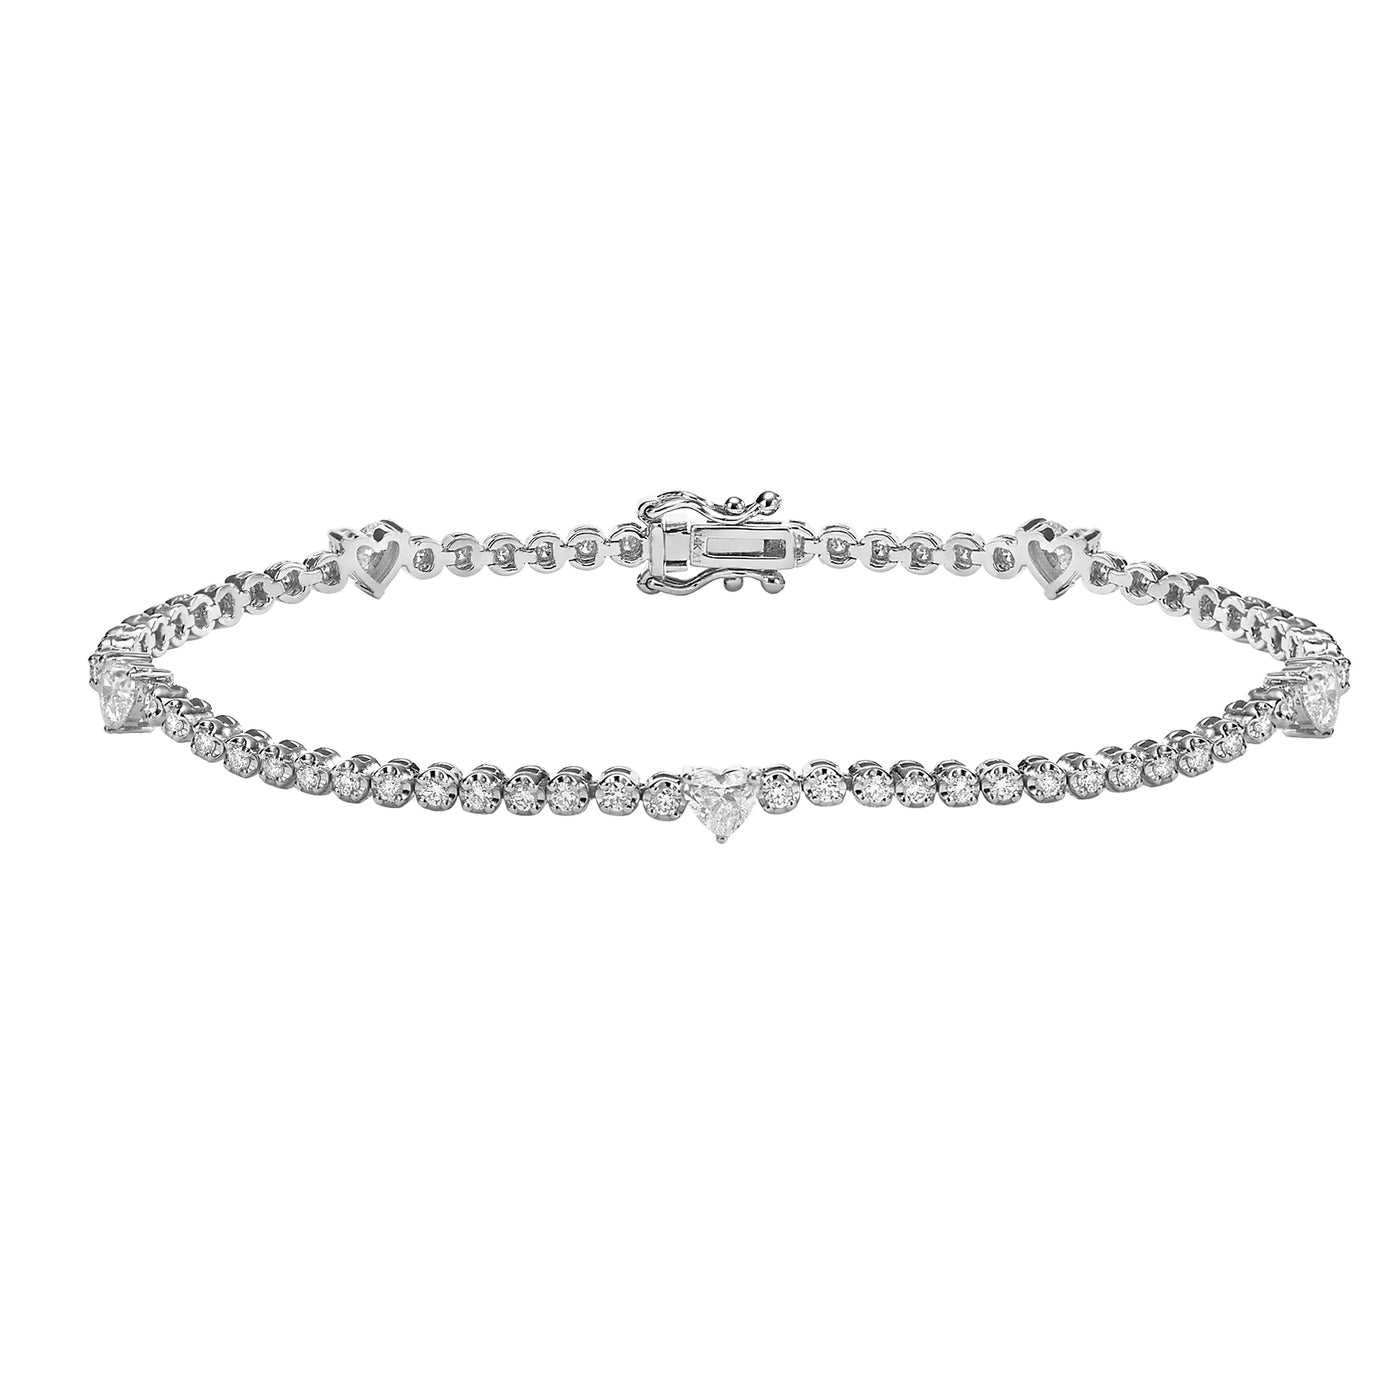 Tennis bracelet with 5 hearts diamonds